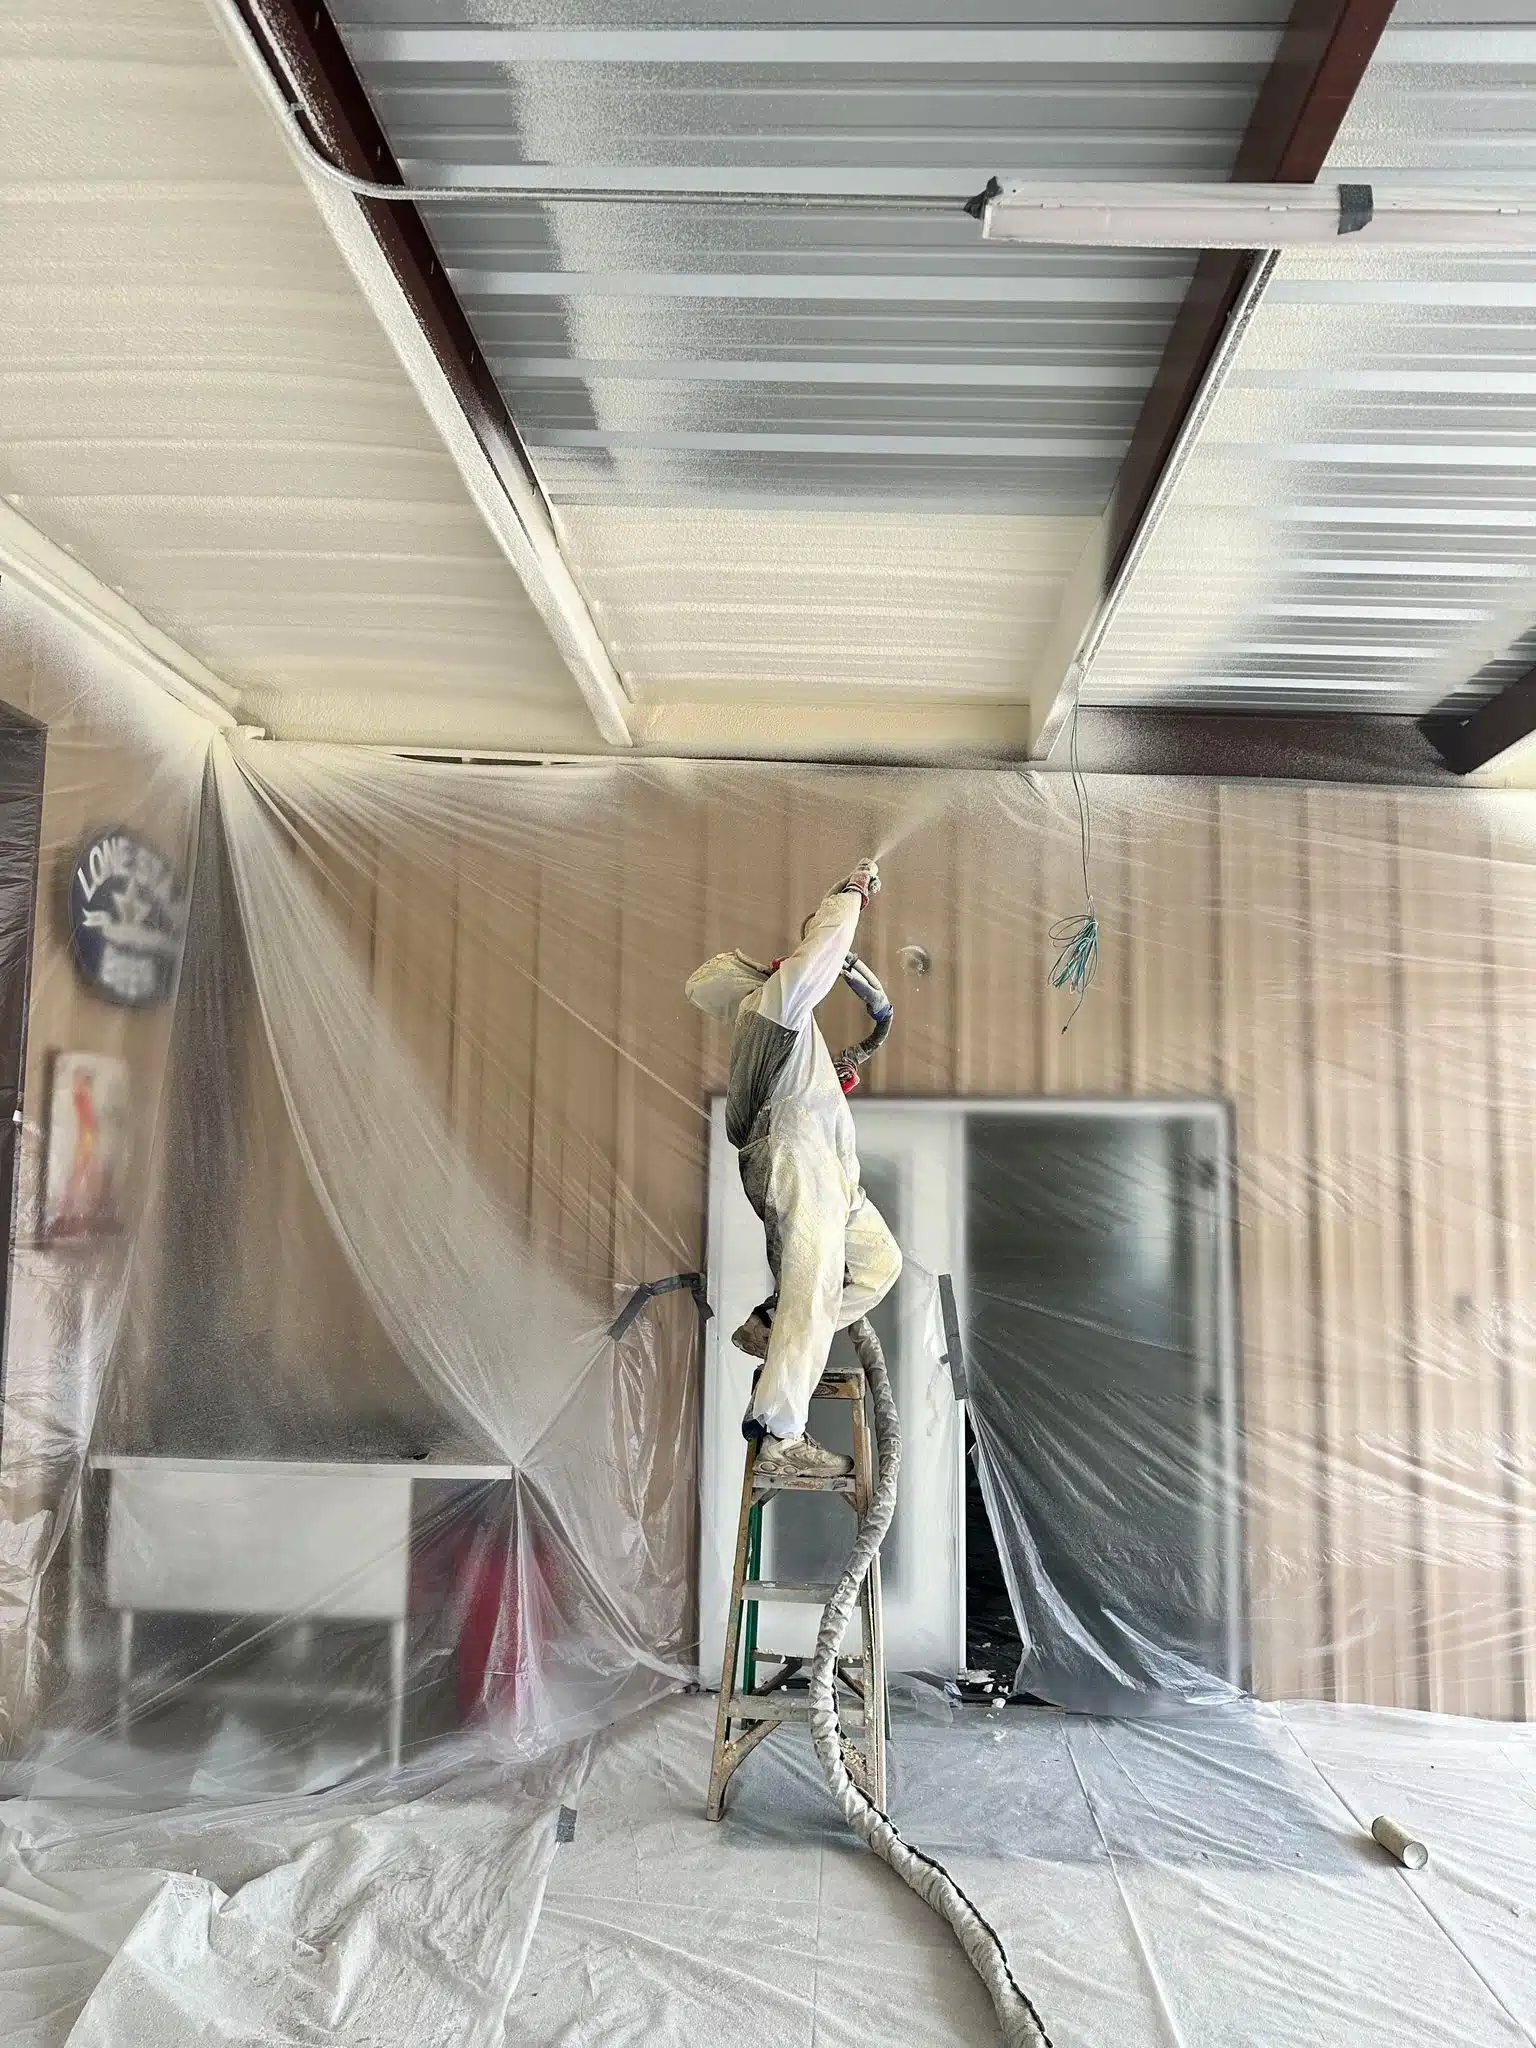 closed cell spray foam insulation contractors